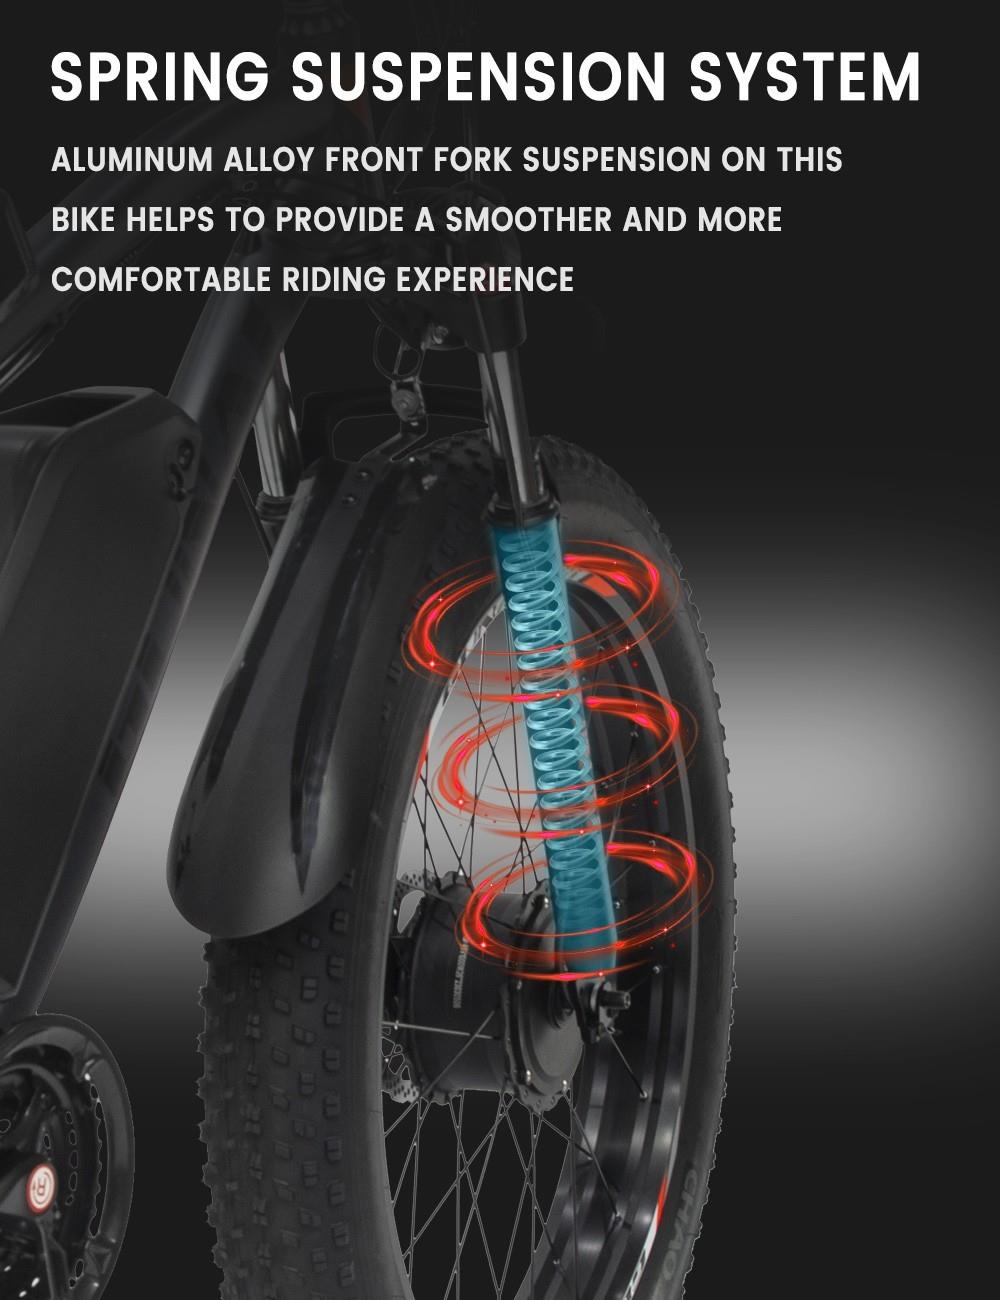 GUNAI GN88 Elektro-Mountainbike, 26*4.0 Zoll Fat Tire, 1000W*2 Motoren, 48V 22Ah Batterie